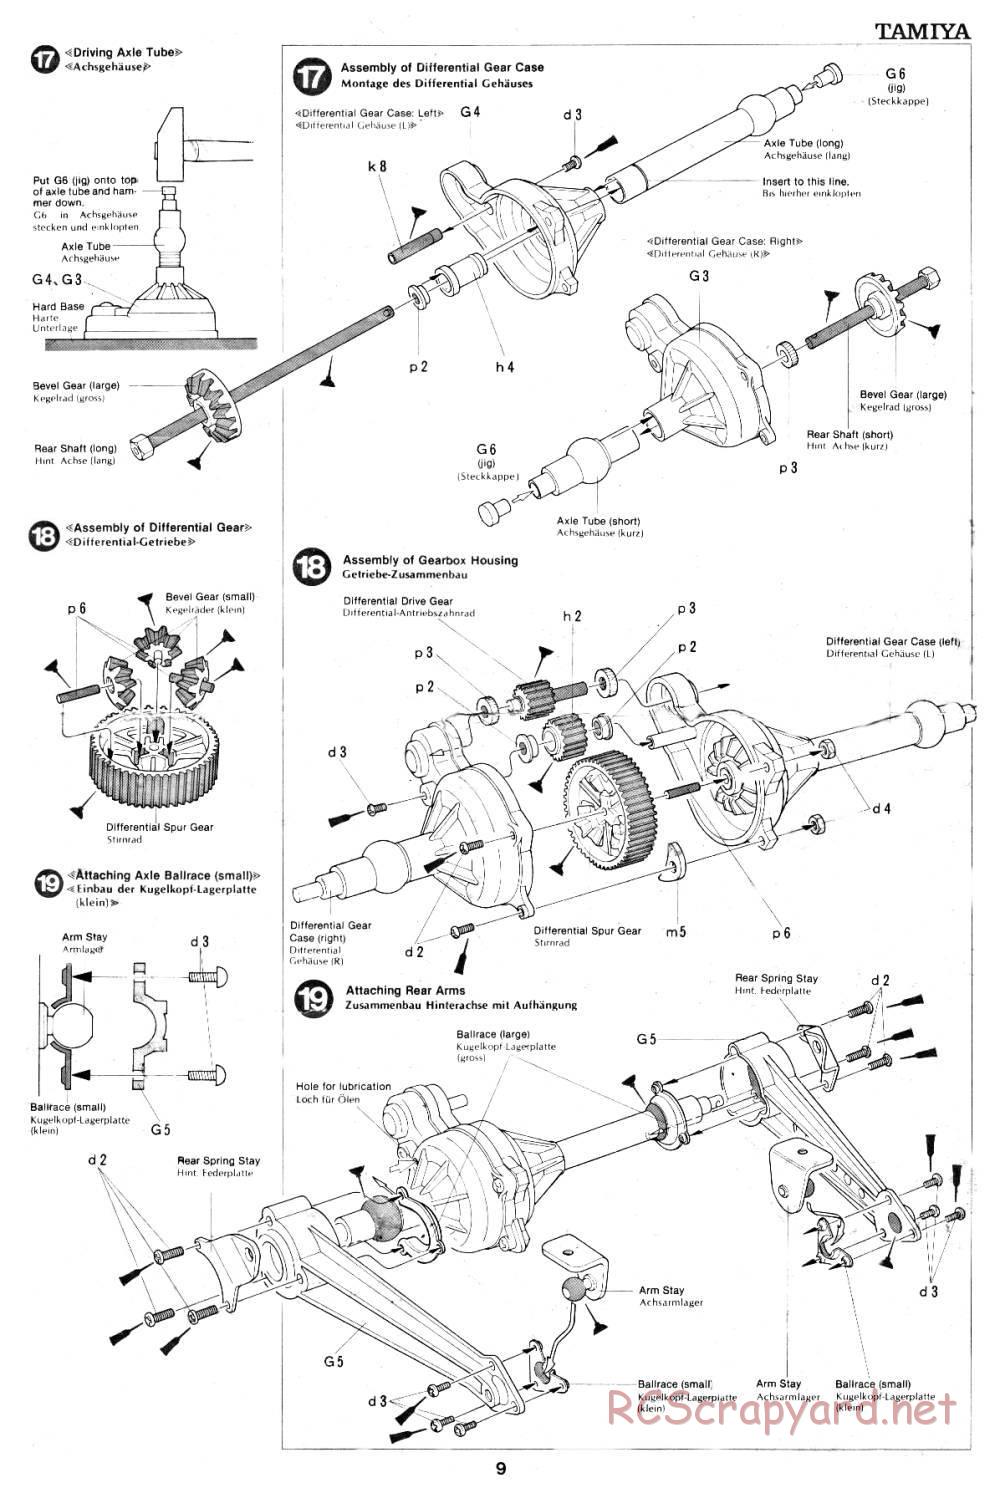 Tamiya - Audi Quattro Rally - 58036 - Manual - Page 9